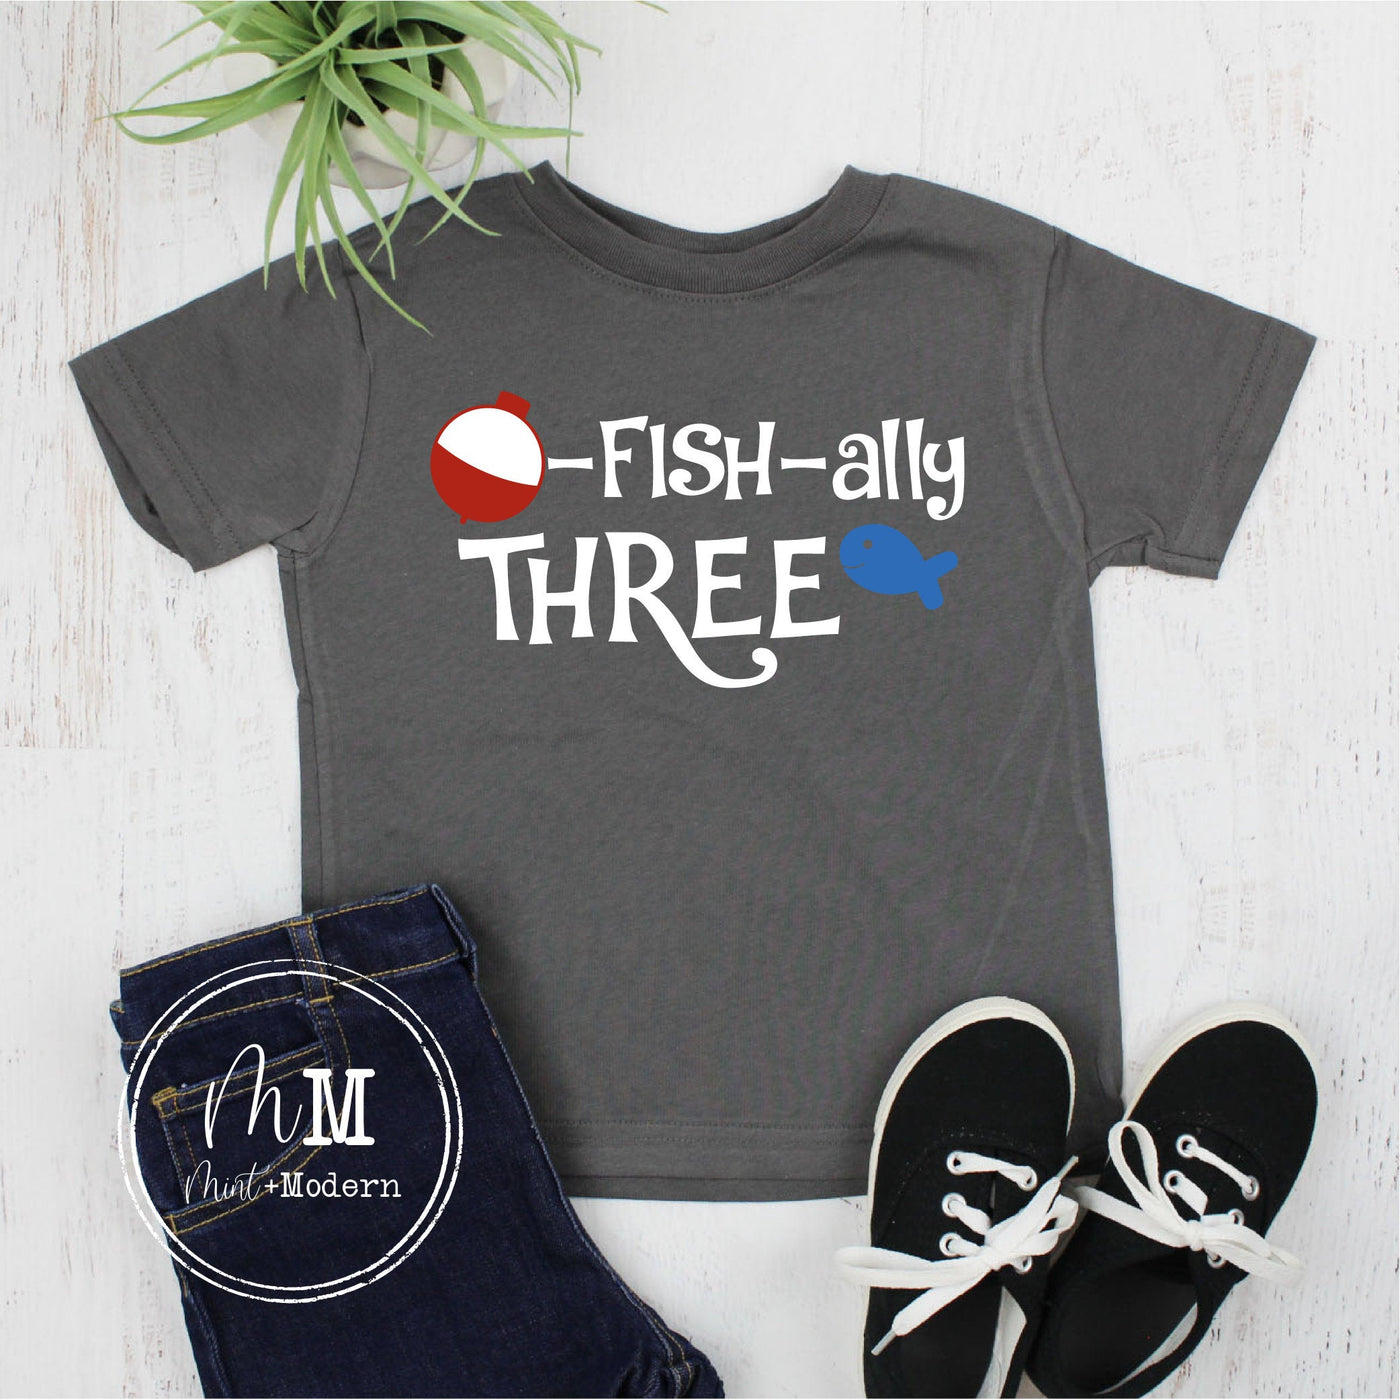 O-Fish-ally Three Toddler Birthday Shirt - Third Birthday Shirt